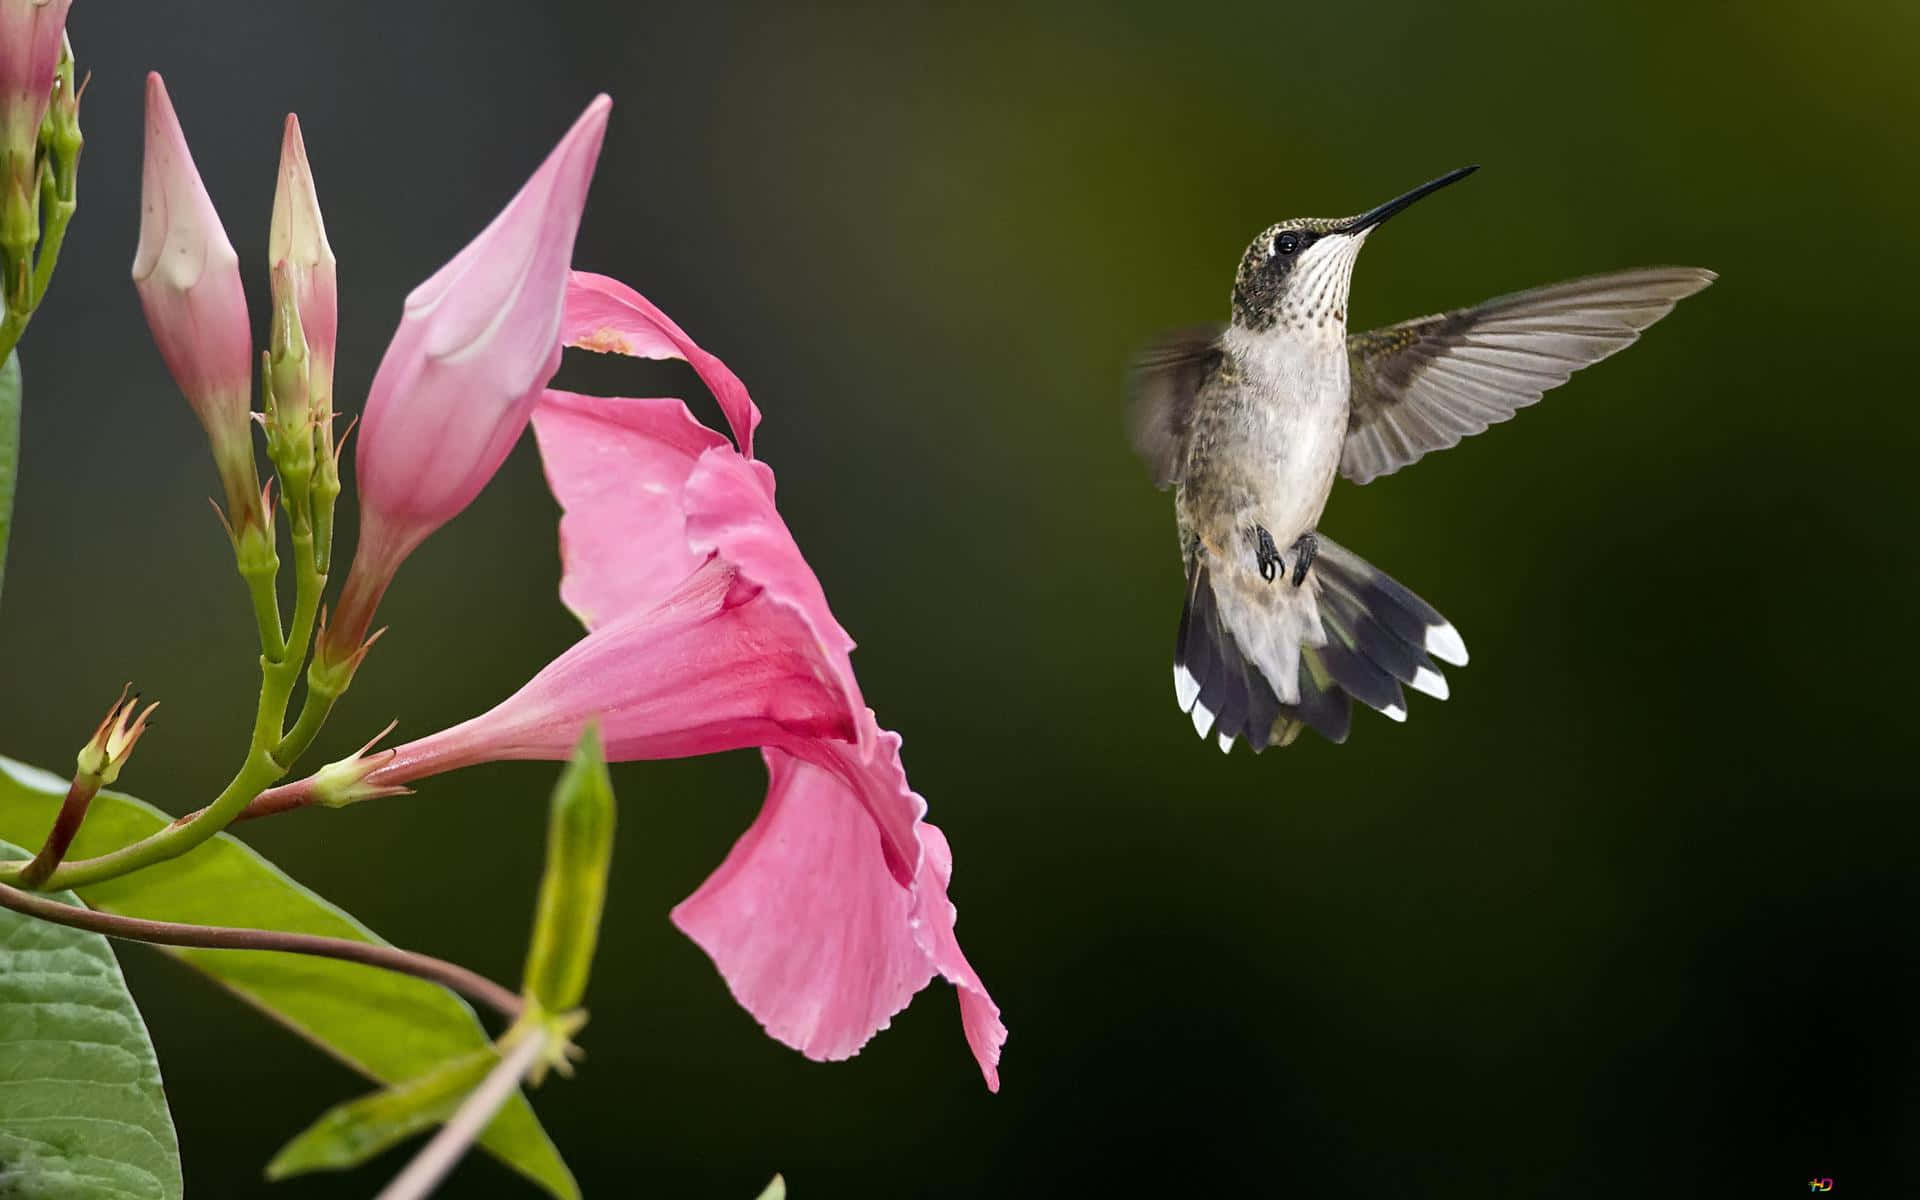 The beauty of a hummingbird in flight